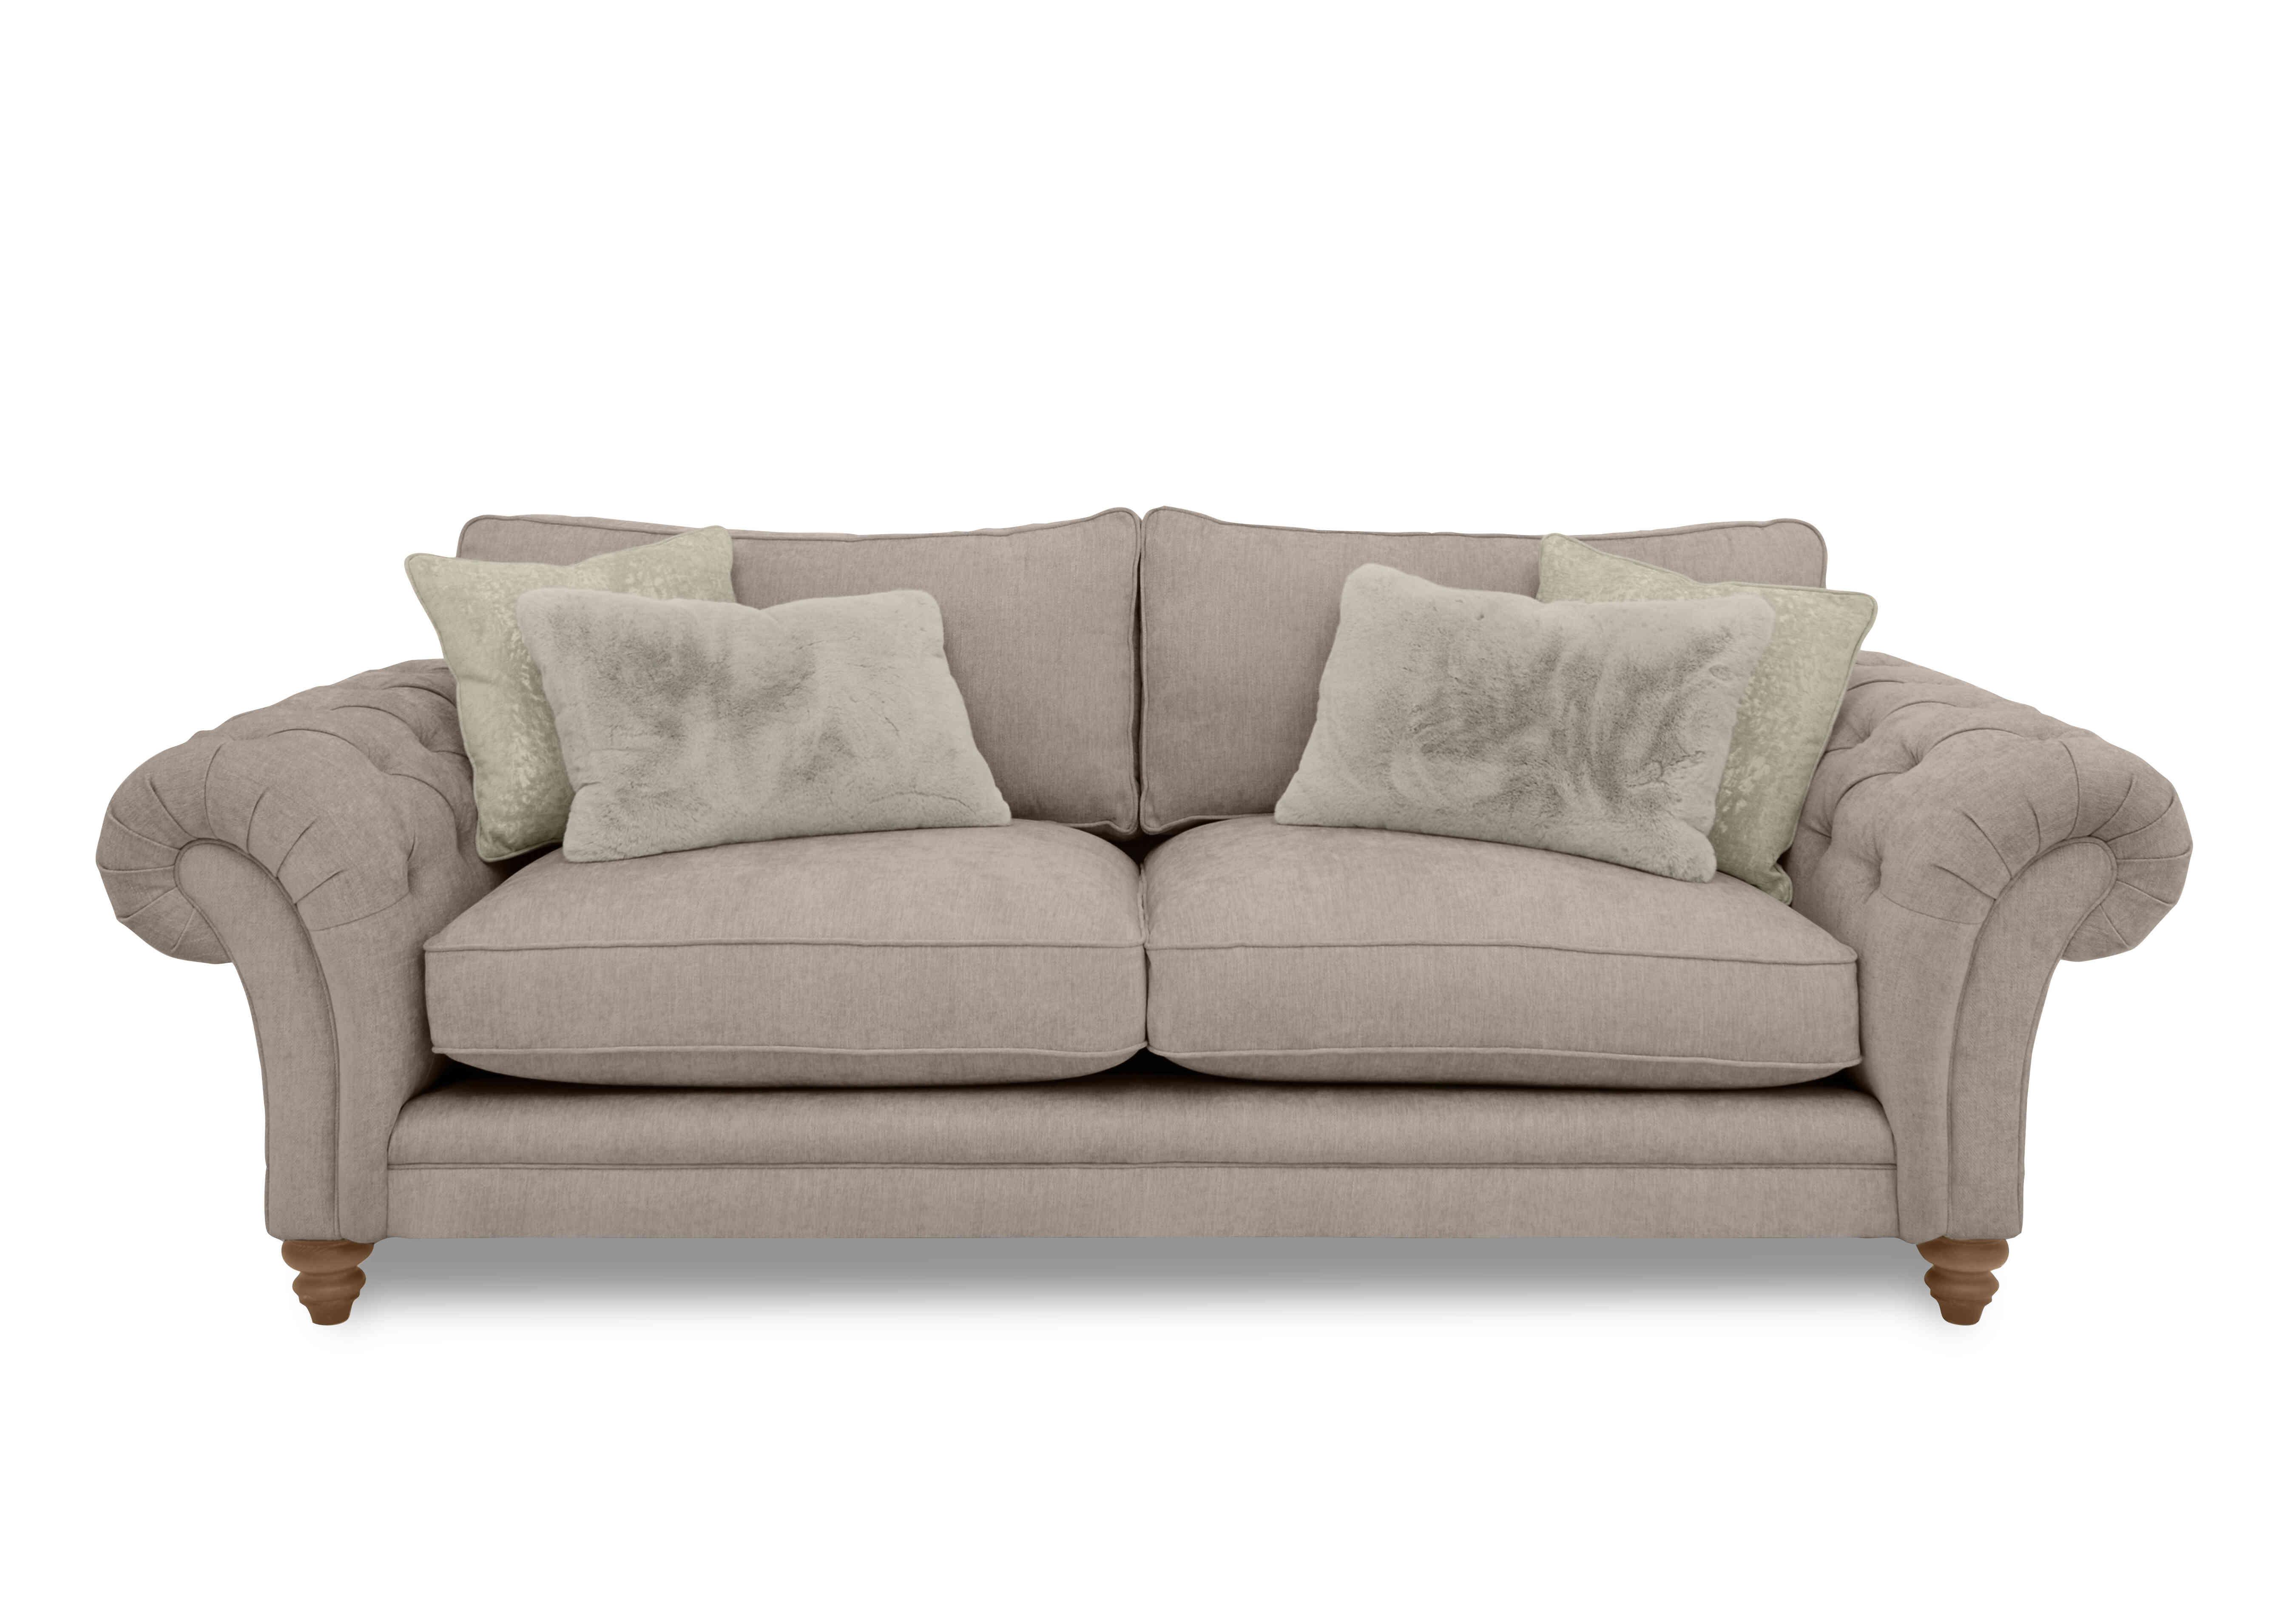 Blenheim 4 Seater Classic Back Sofa in Darwin Mink Of on Furniture Village